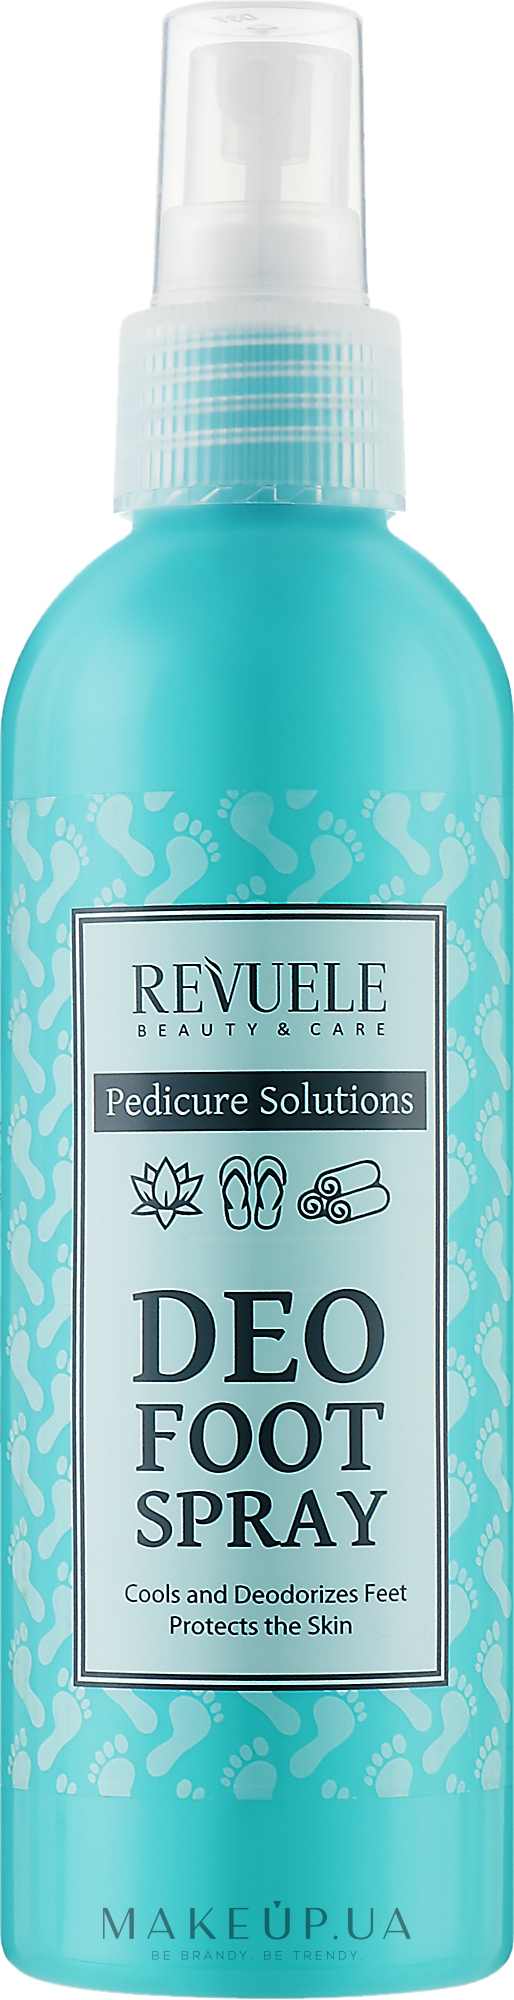 Дезодорант-спрей для ног - Revuele Pedicure Solutions Deo Foot Spray — фото 200ml